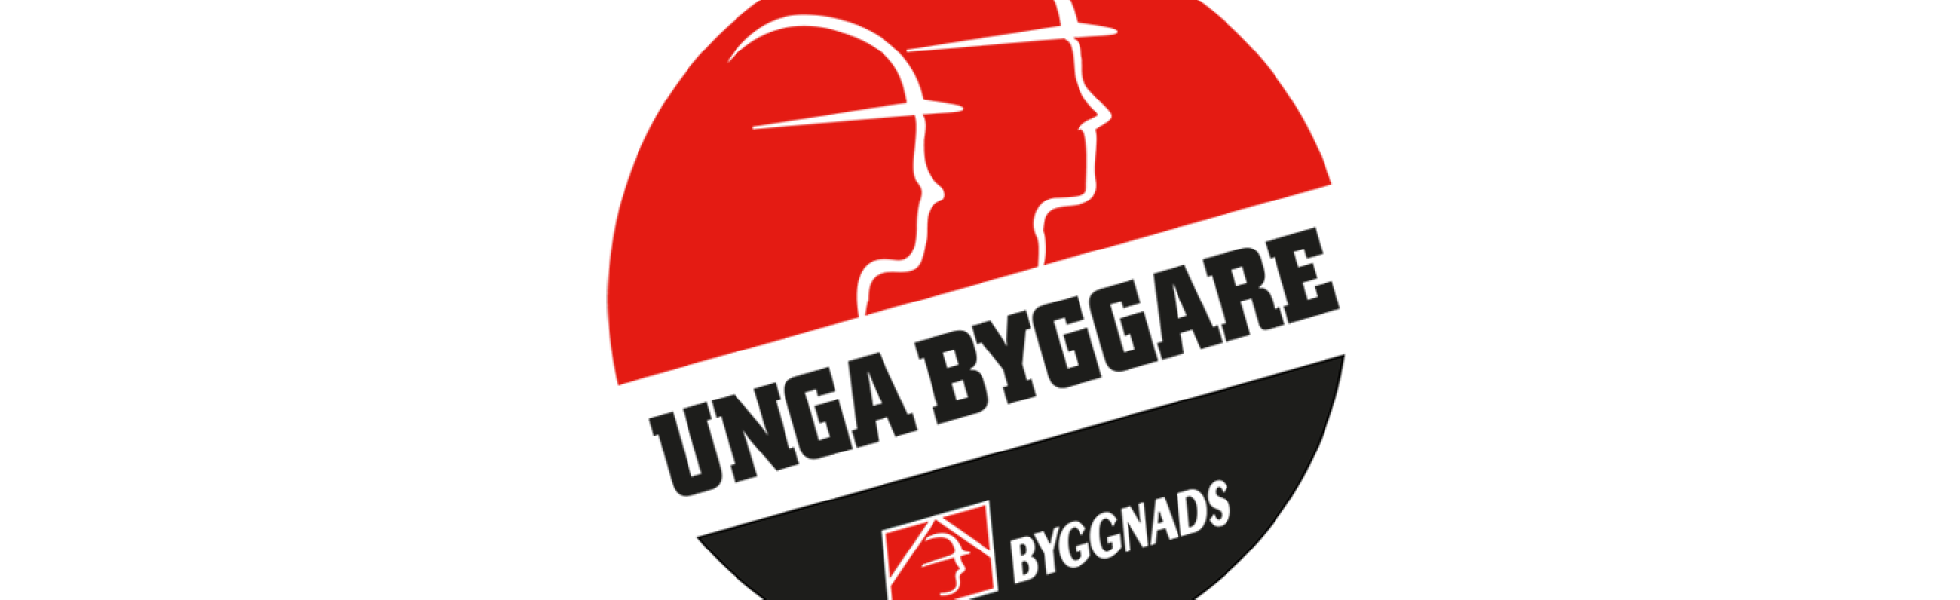 Unga Byggares logotyp